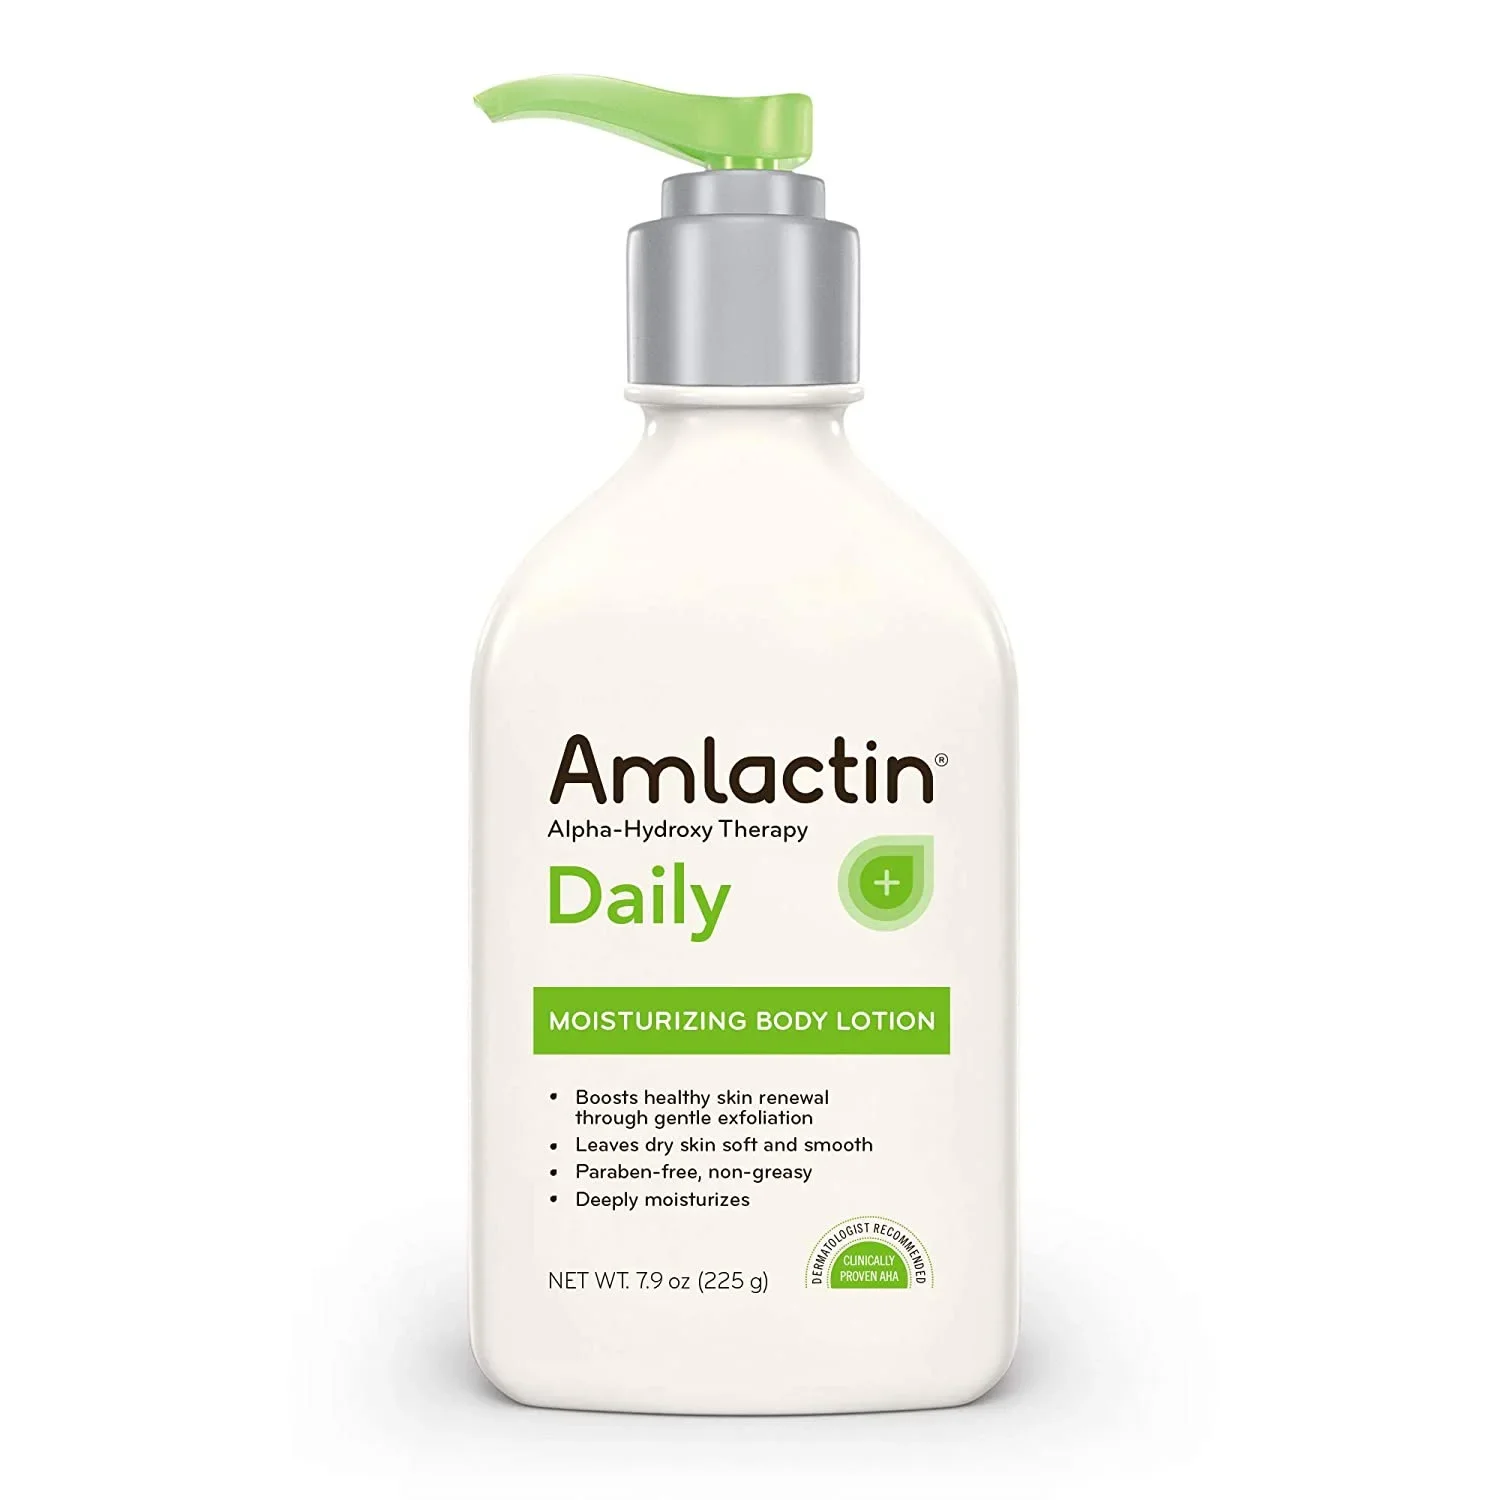 Amlactin Daily Body Moisturizing Lotion